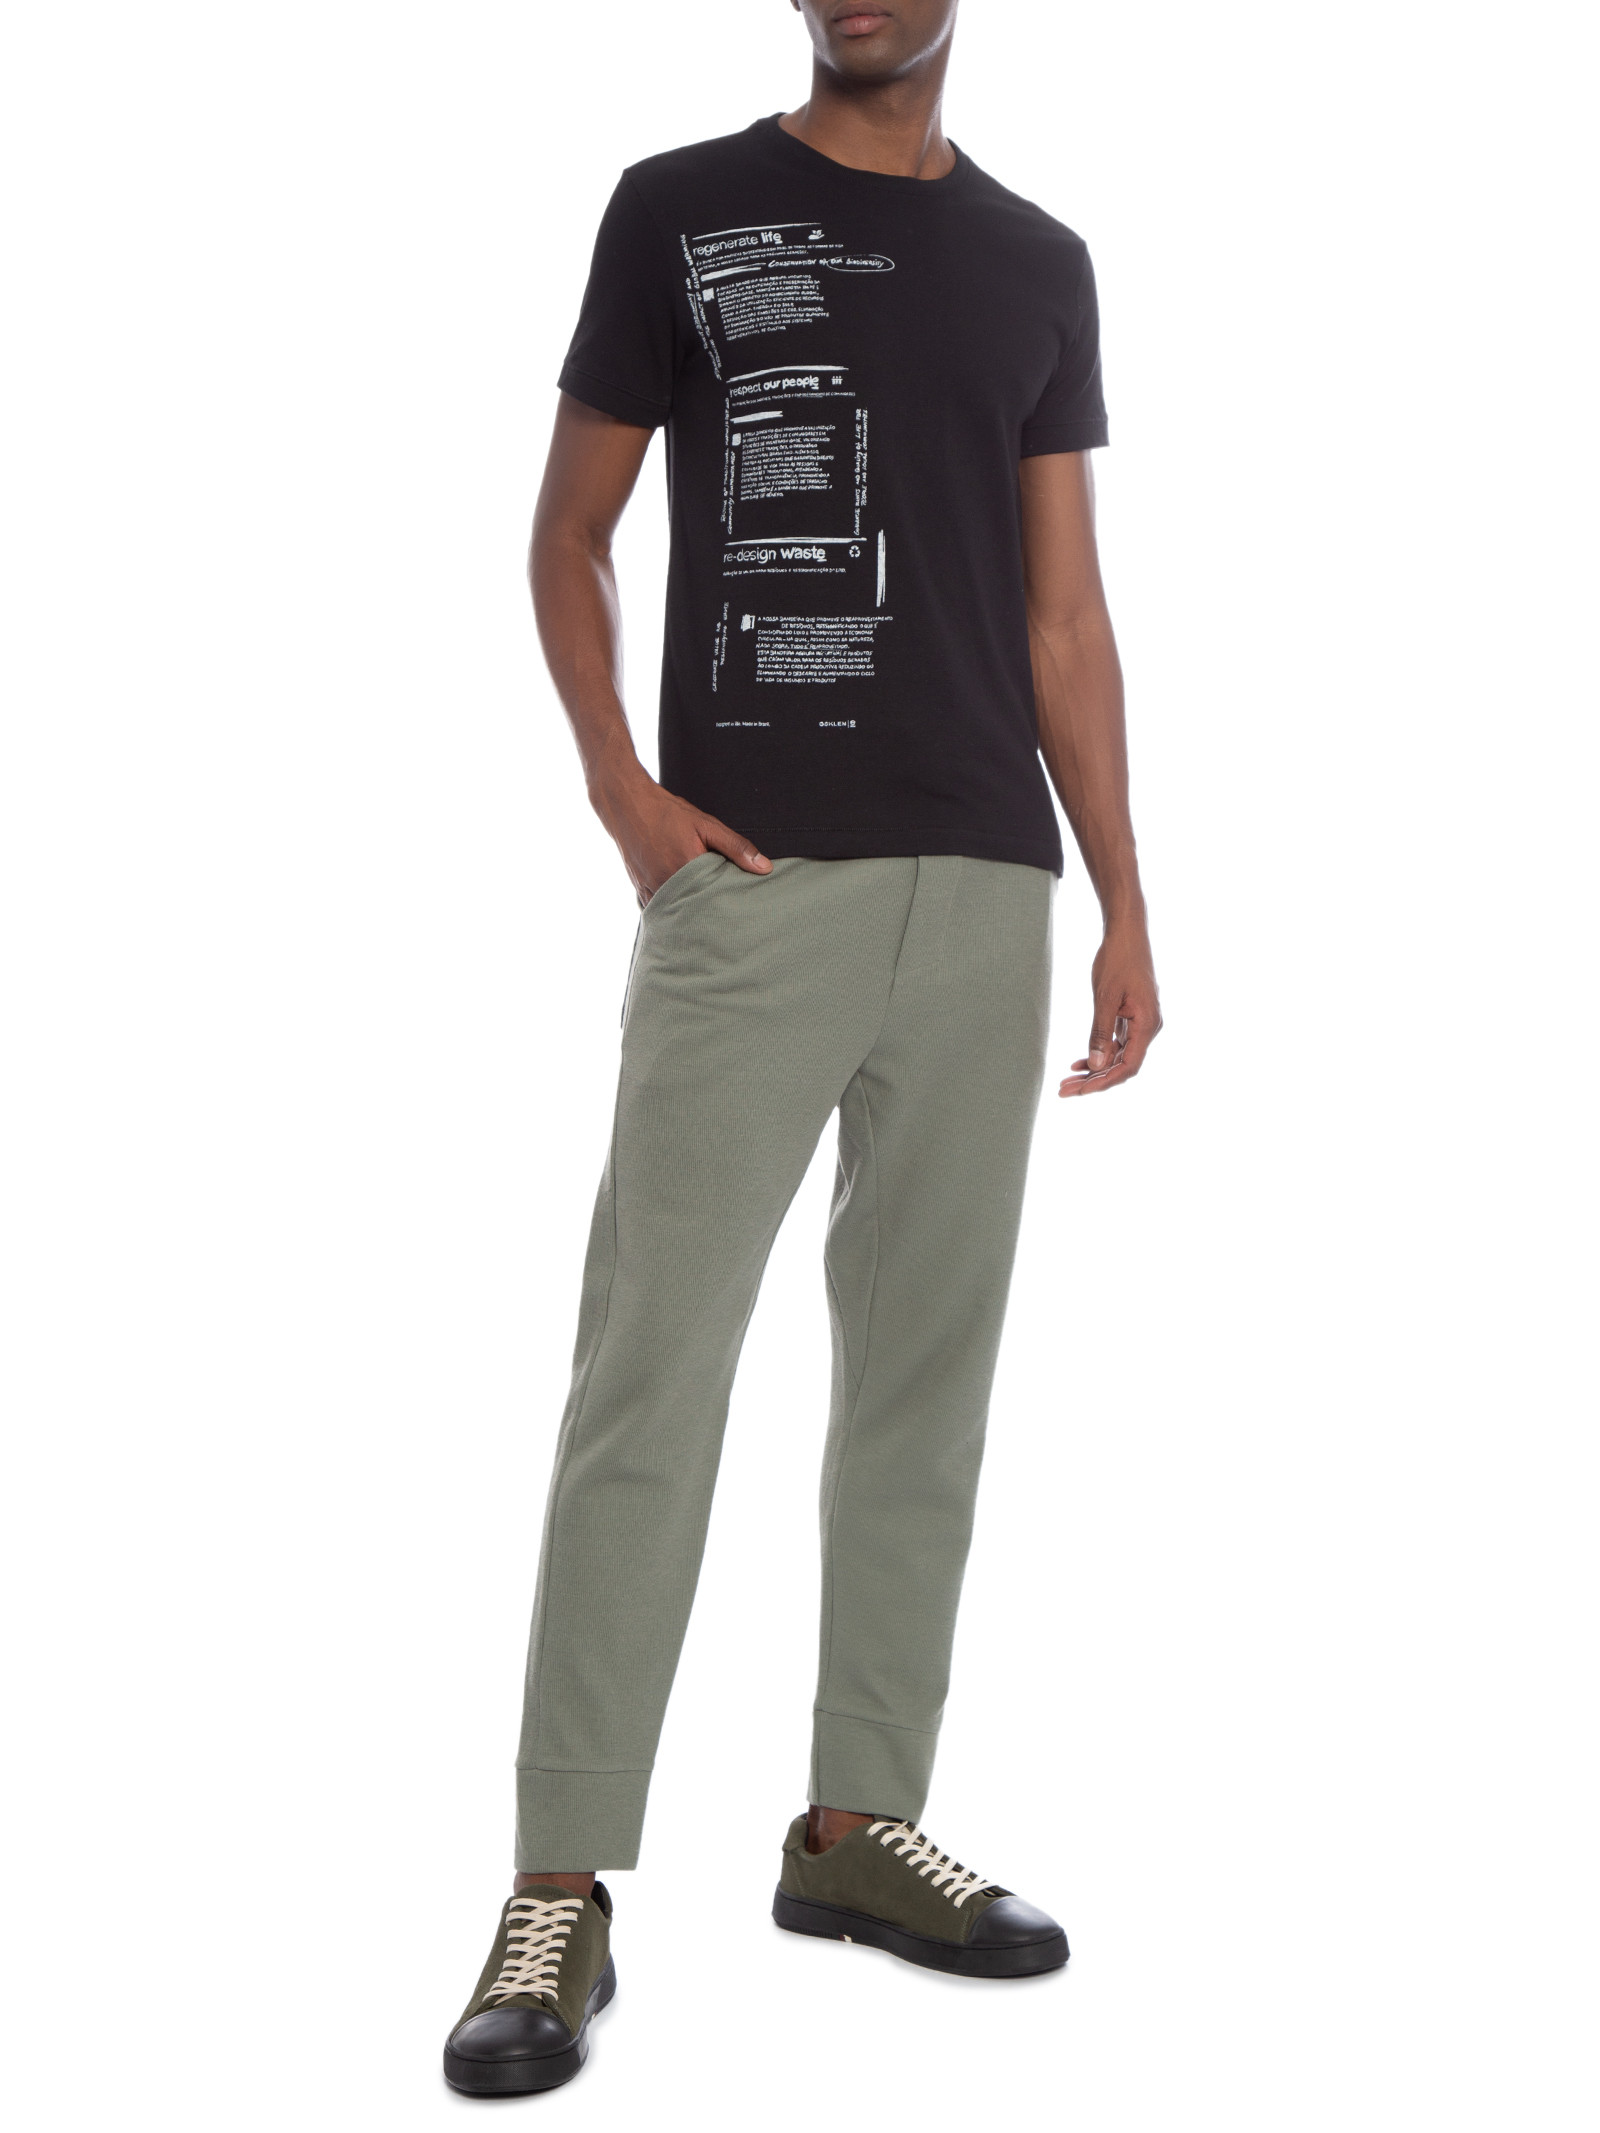 T-SHIRT QUALITY Camisa Tommy Hilfiger R$49,99 em